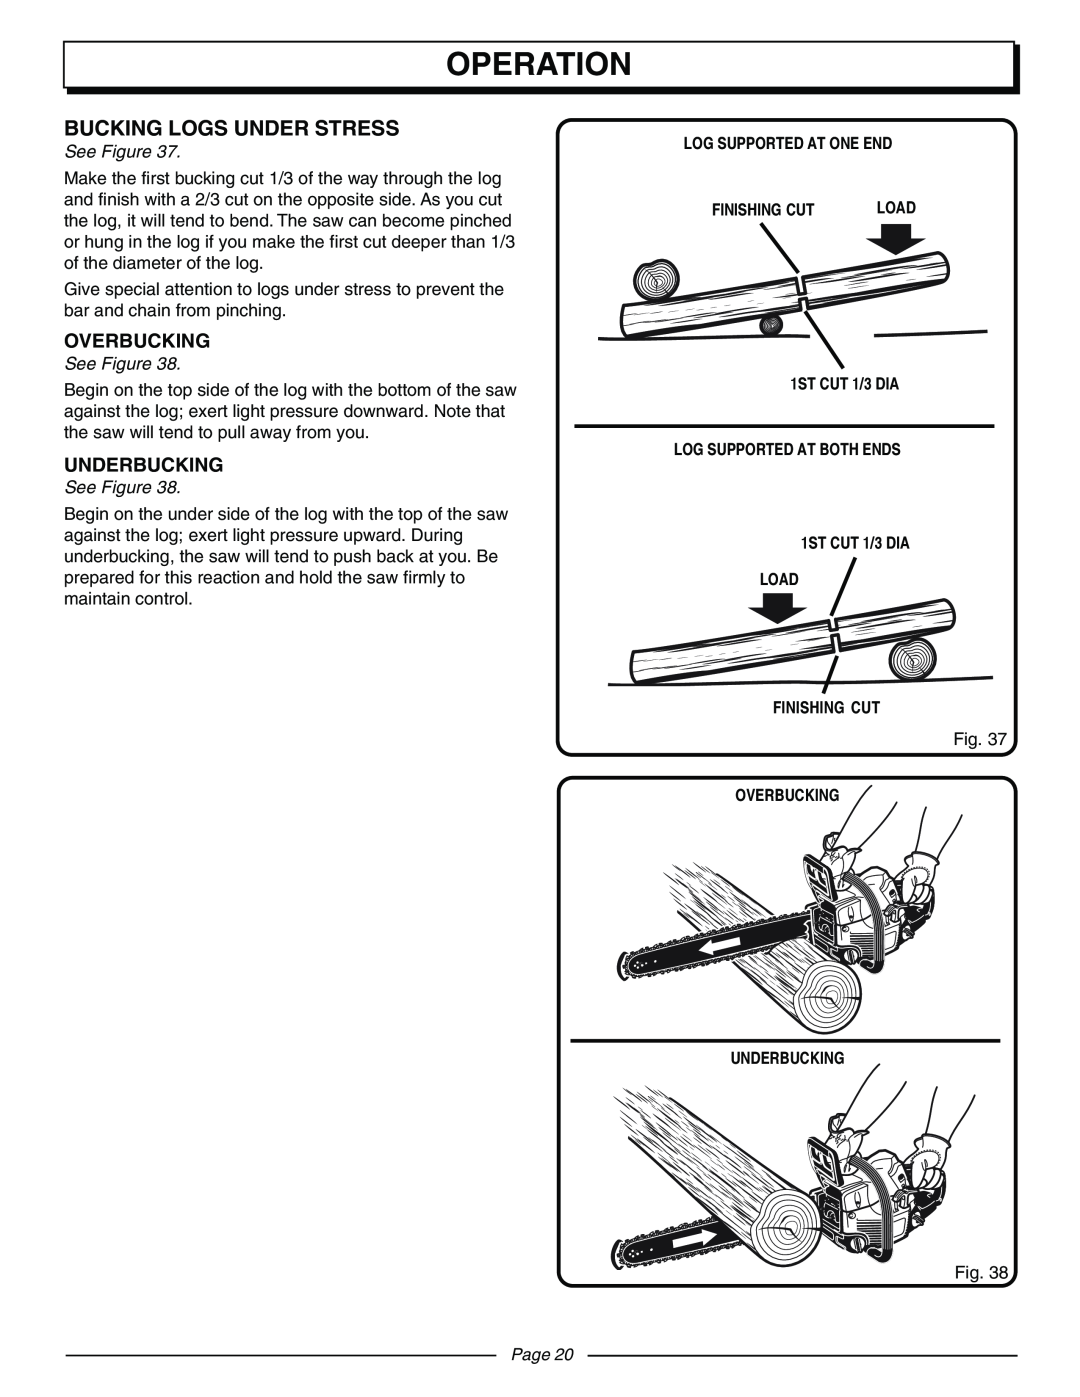 Homelite UT10570 manual Bucking Logs Under Stress, Operation, Overbucking, Underbucking, See Figure, Page 